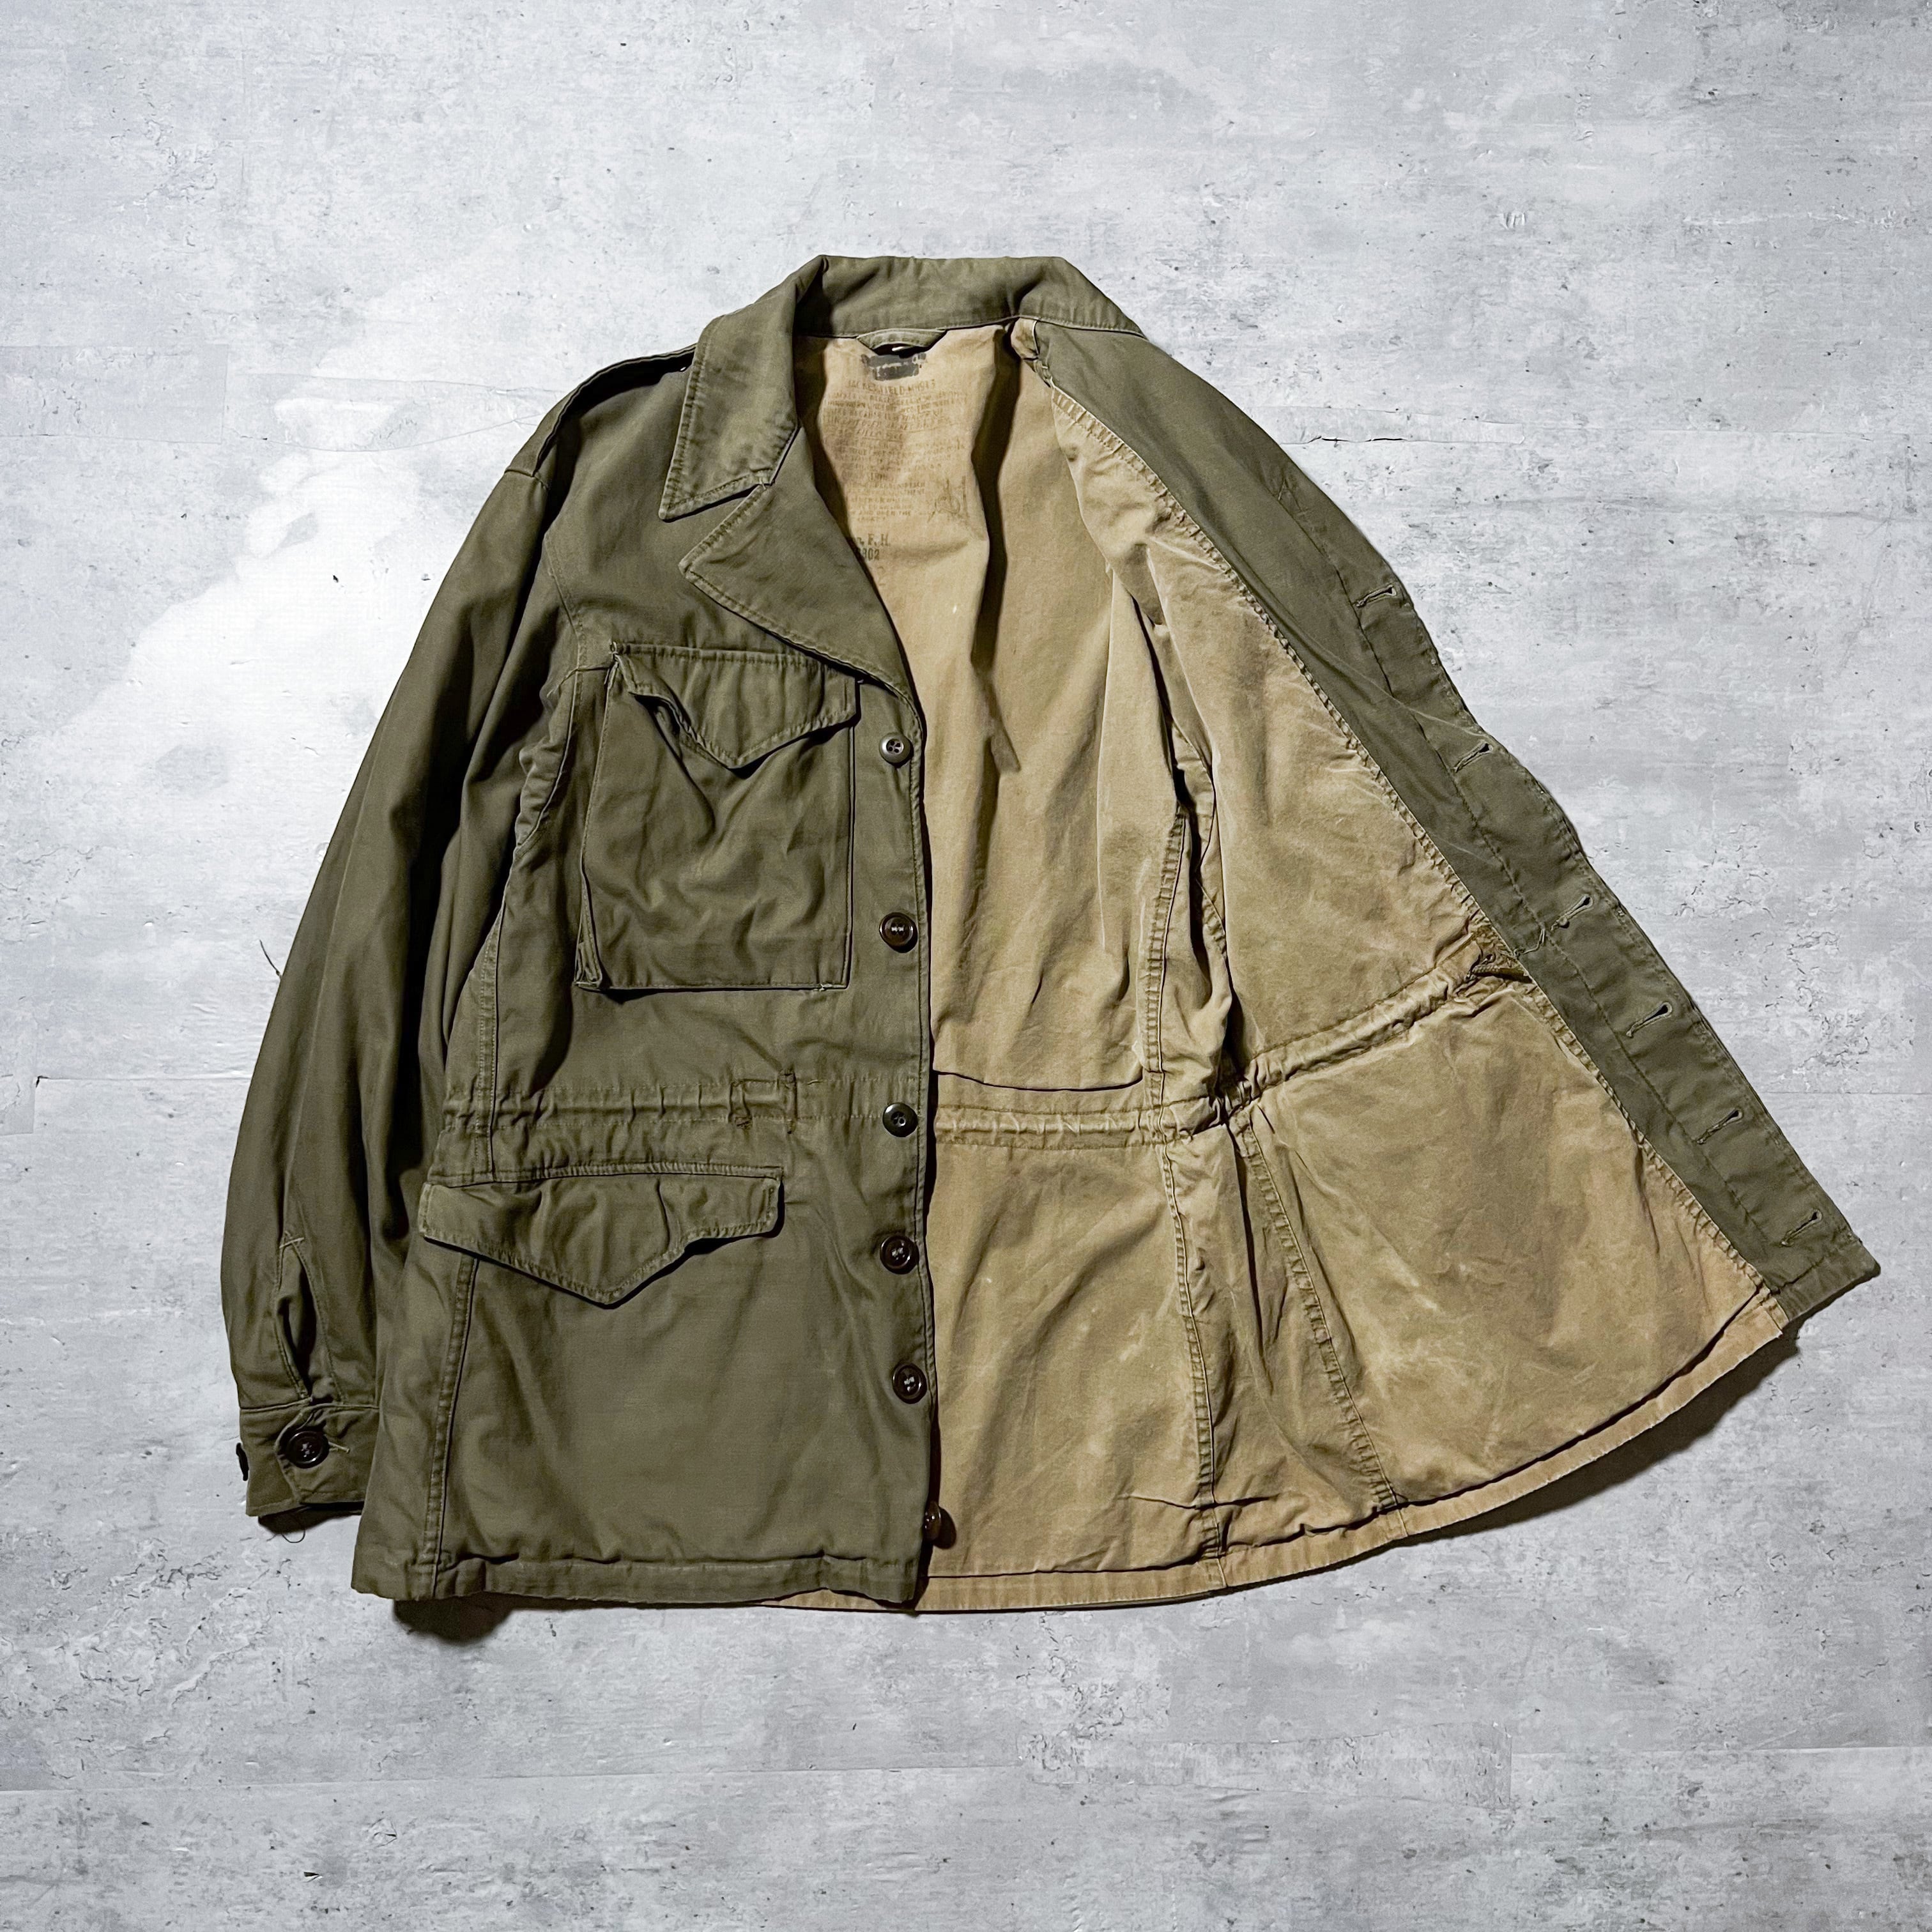 40s “US ARMY” M-43 field jacket 34R 40年代 M-1943 米国軍 米軍